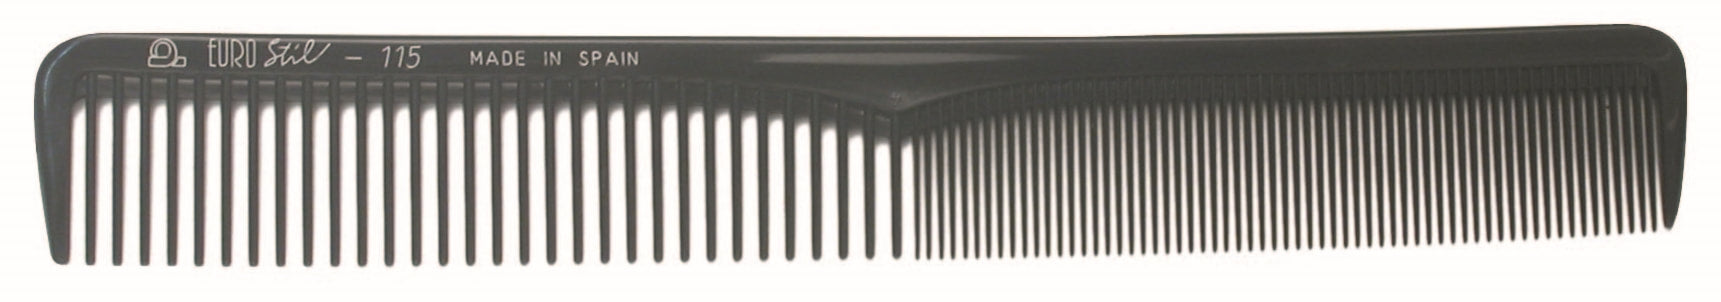 EuroStil #115 Cutting Comb 180mm